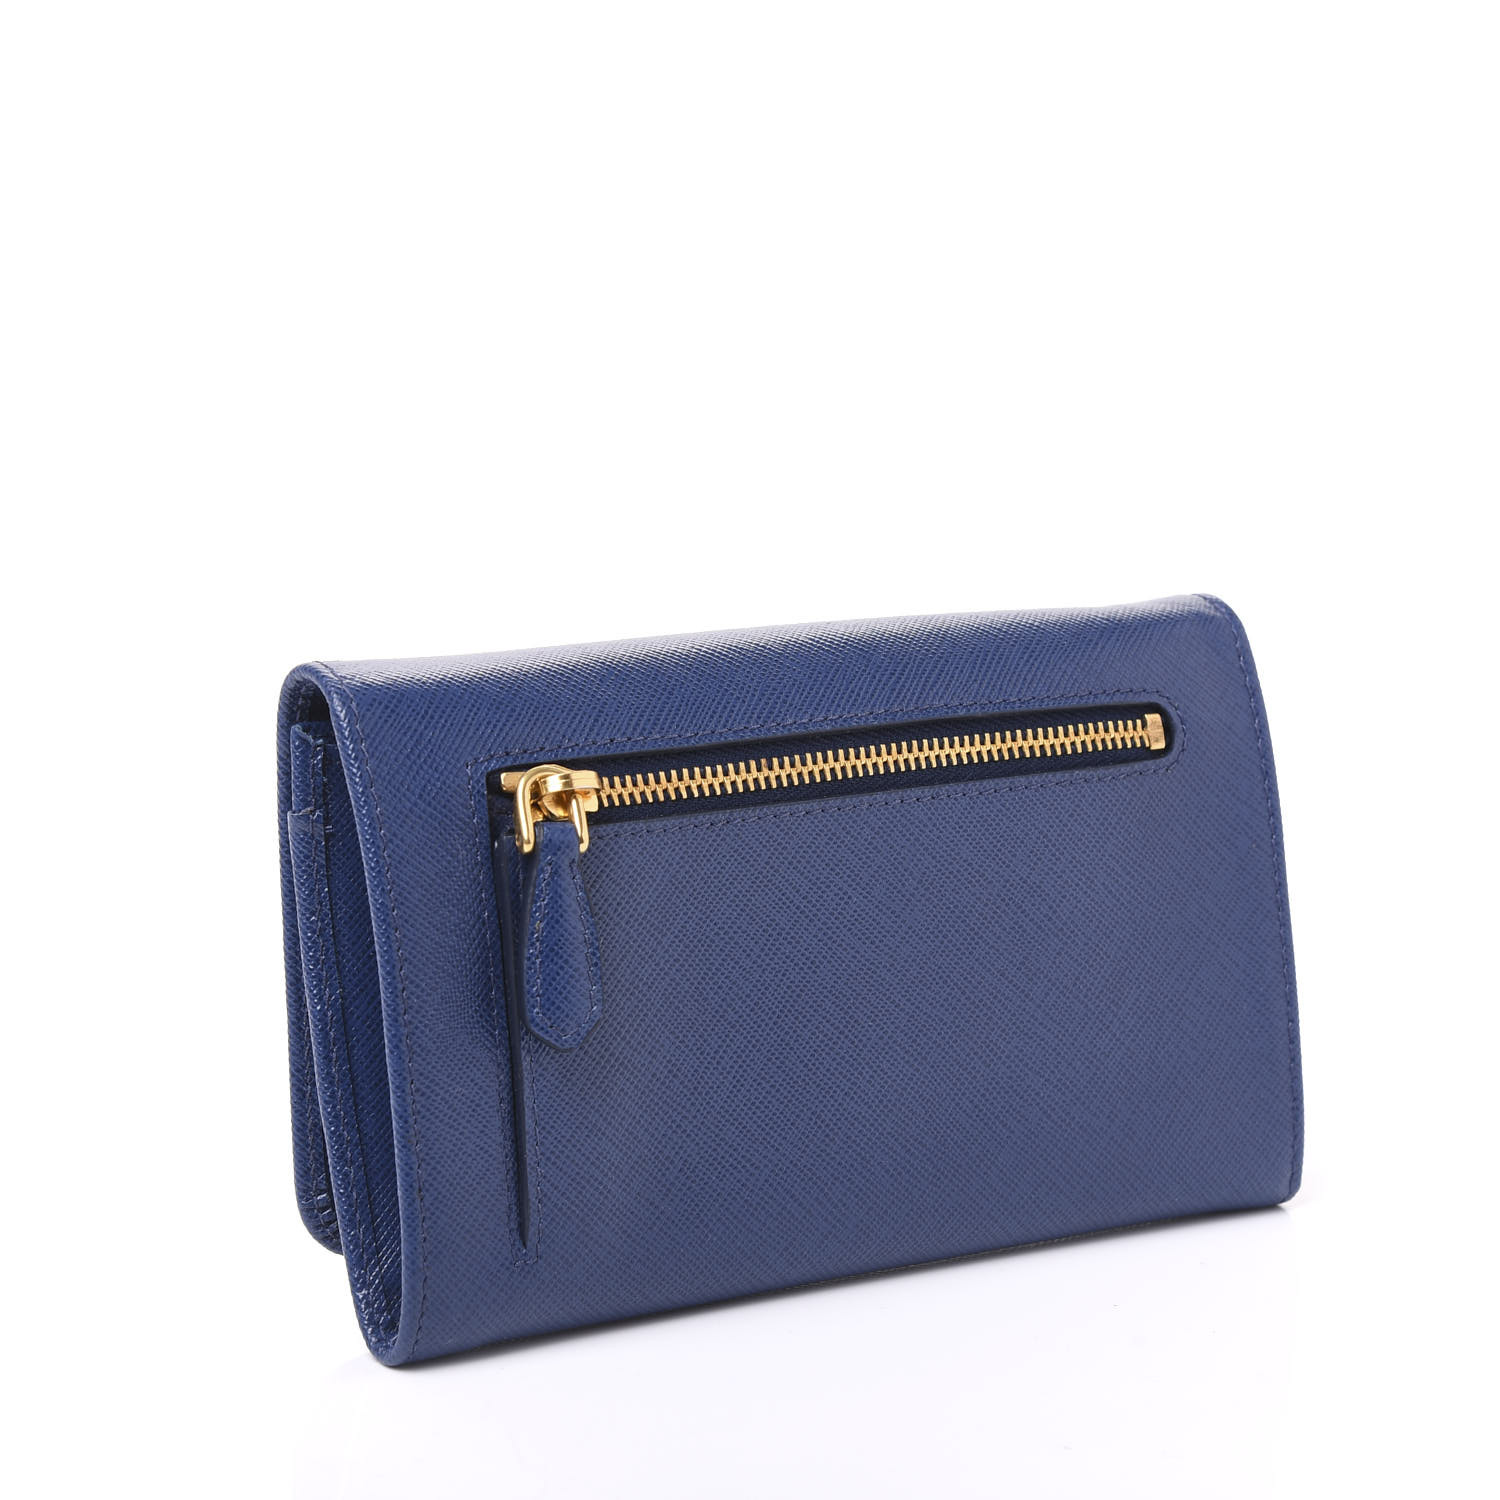 PRADA Saffiano Metal Wristlet Wallet Bluette 589841